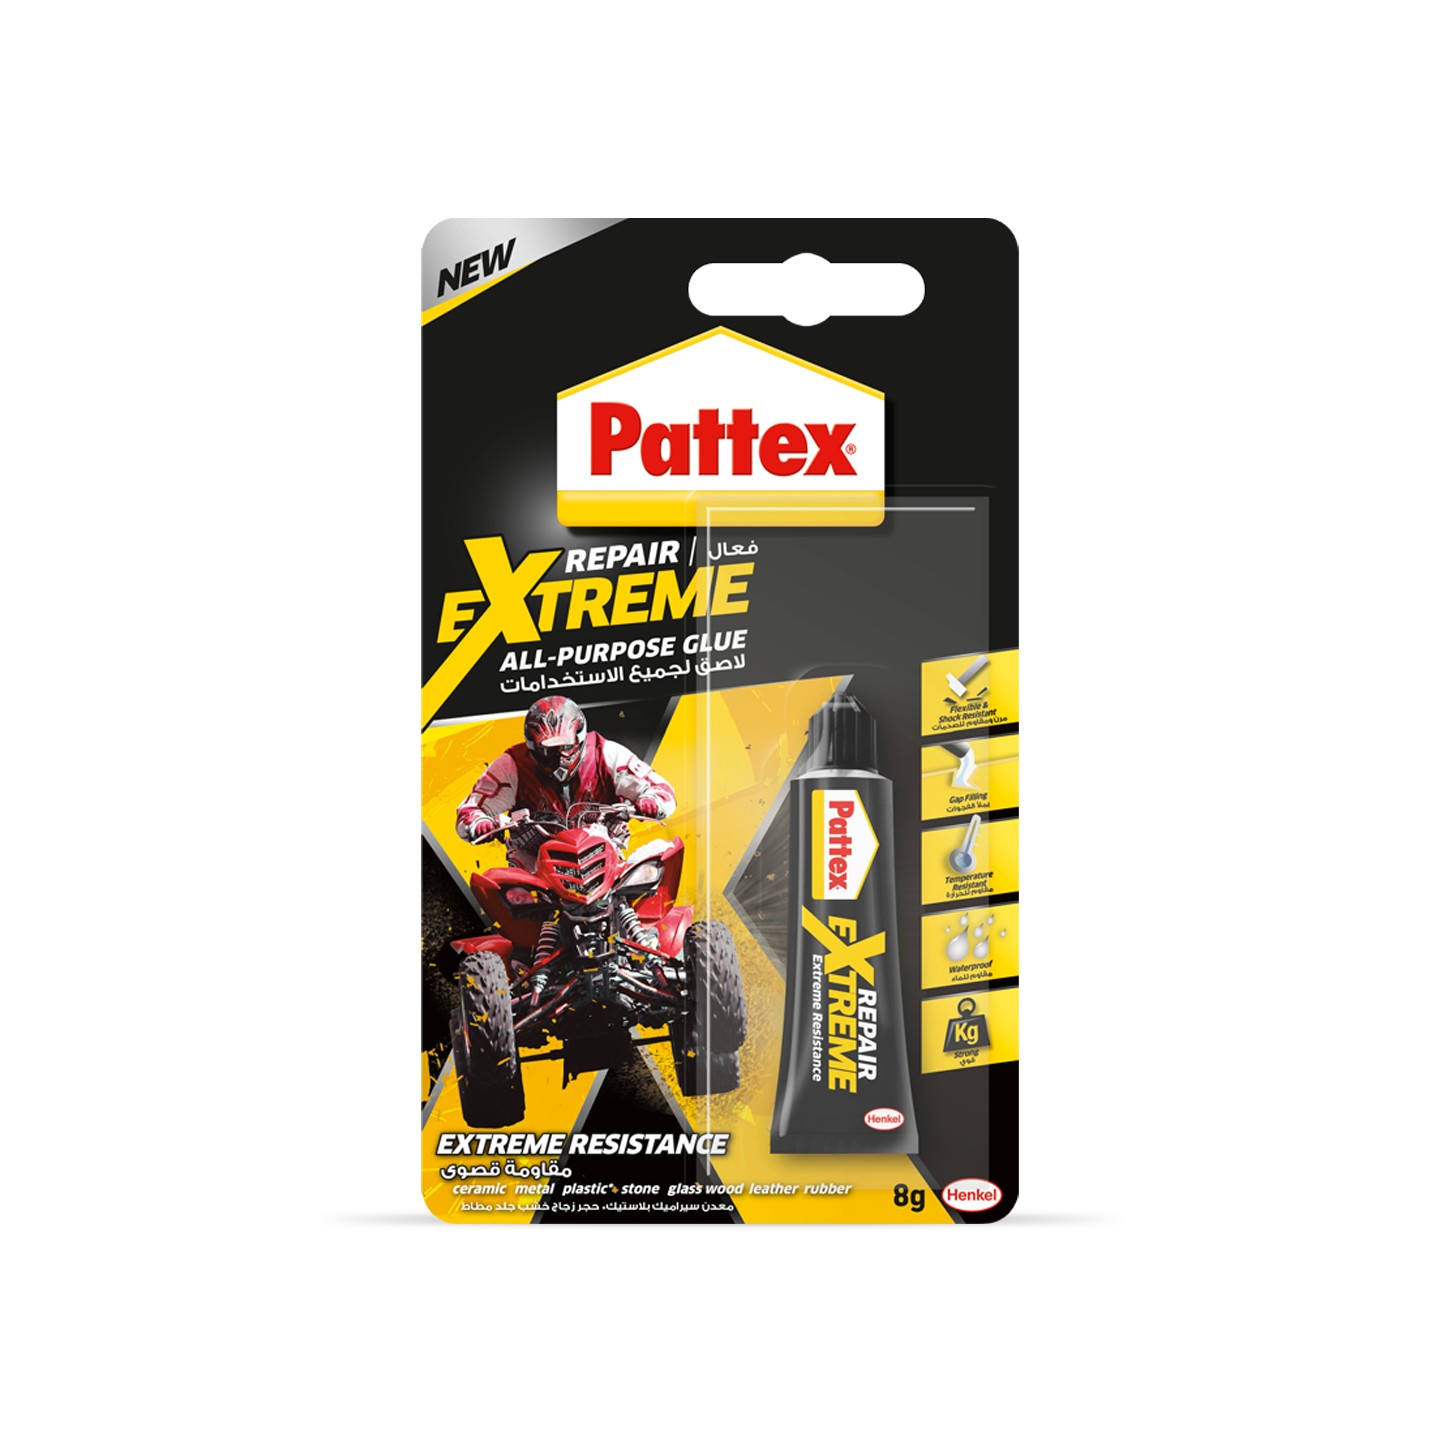 Pattex Repair Extreme - Pattex Pattex